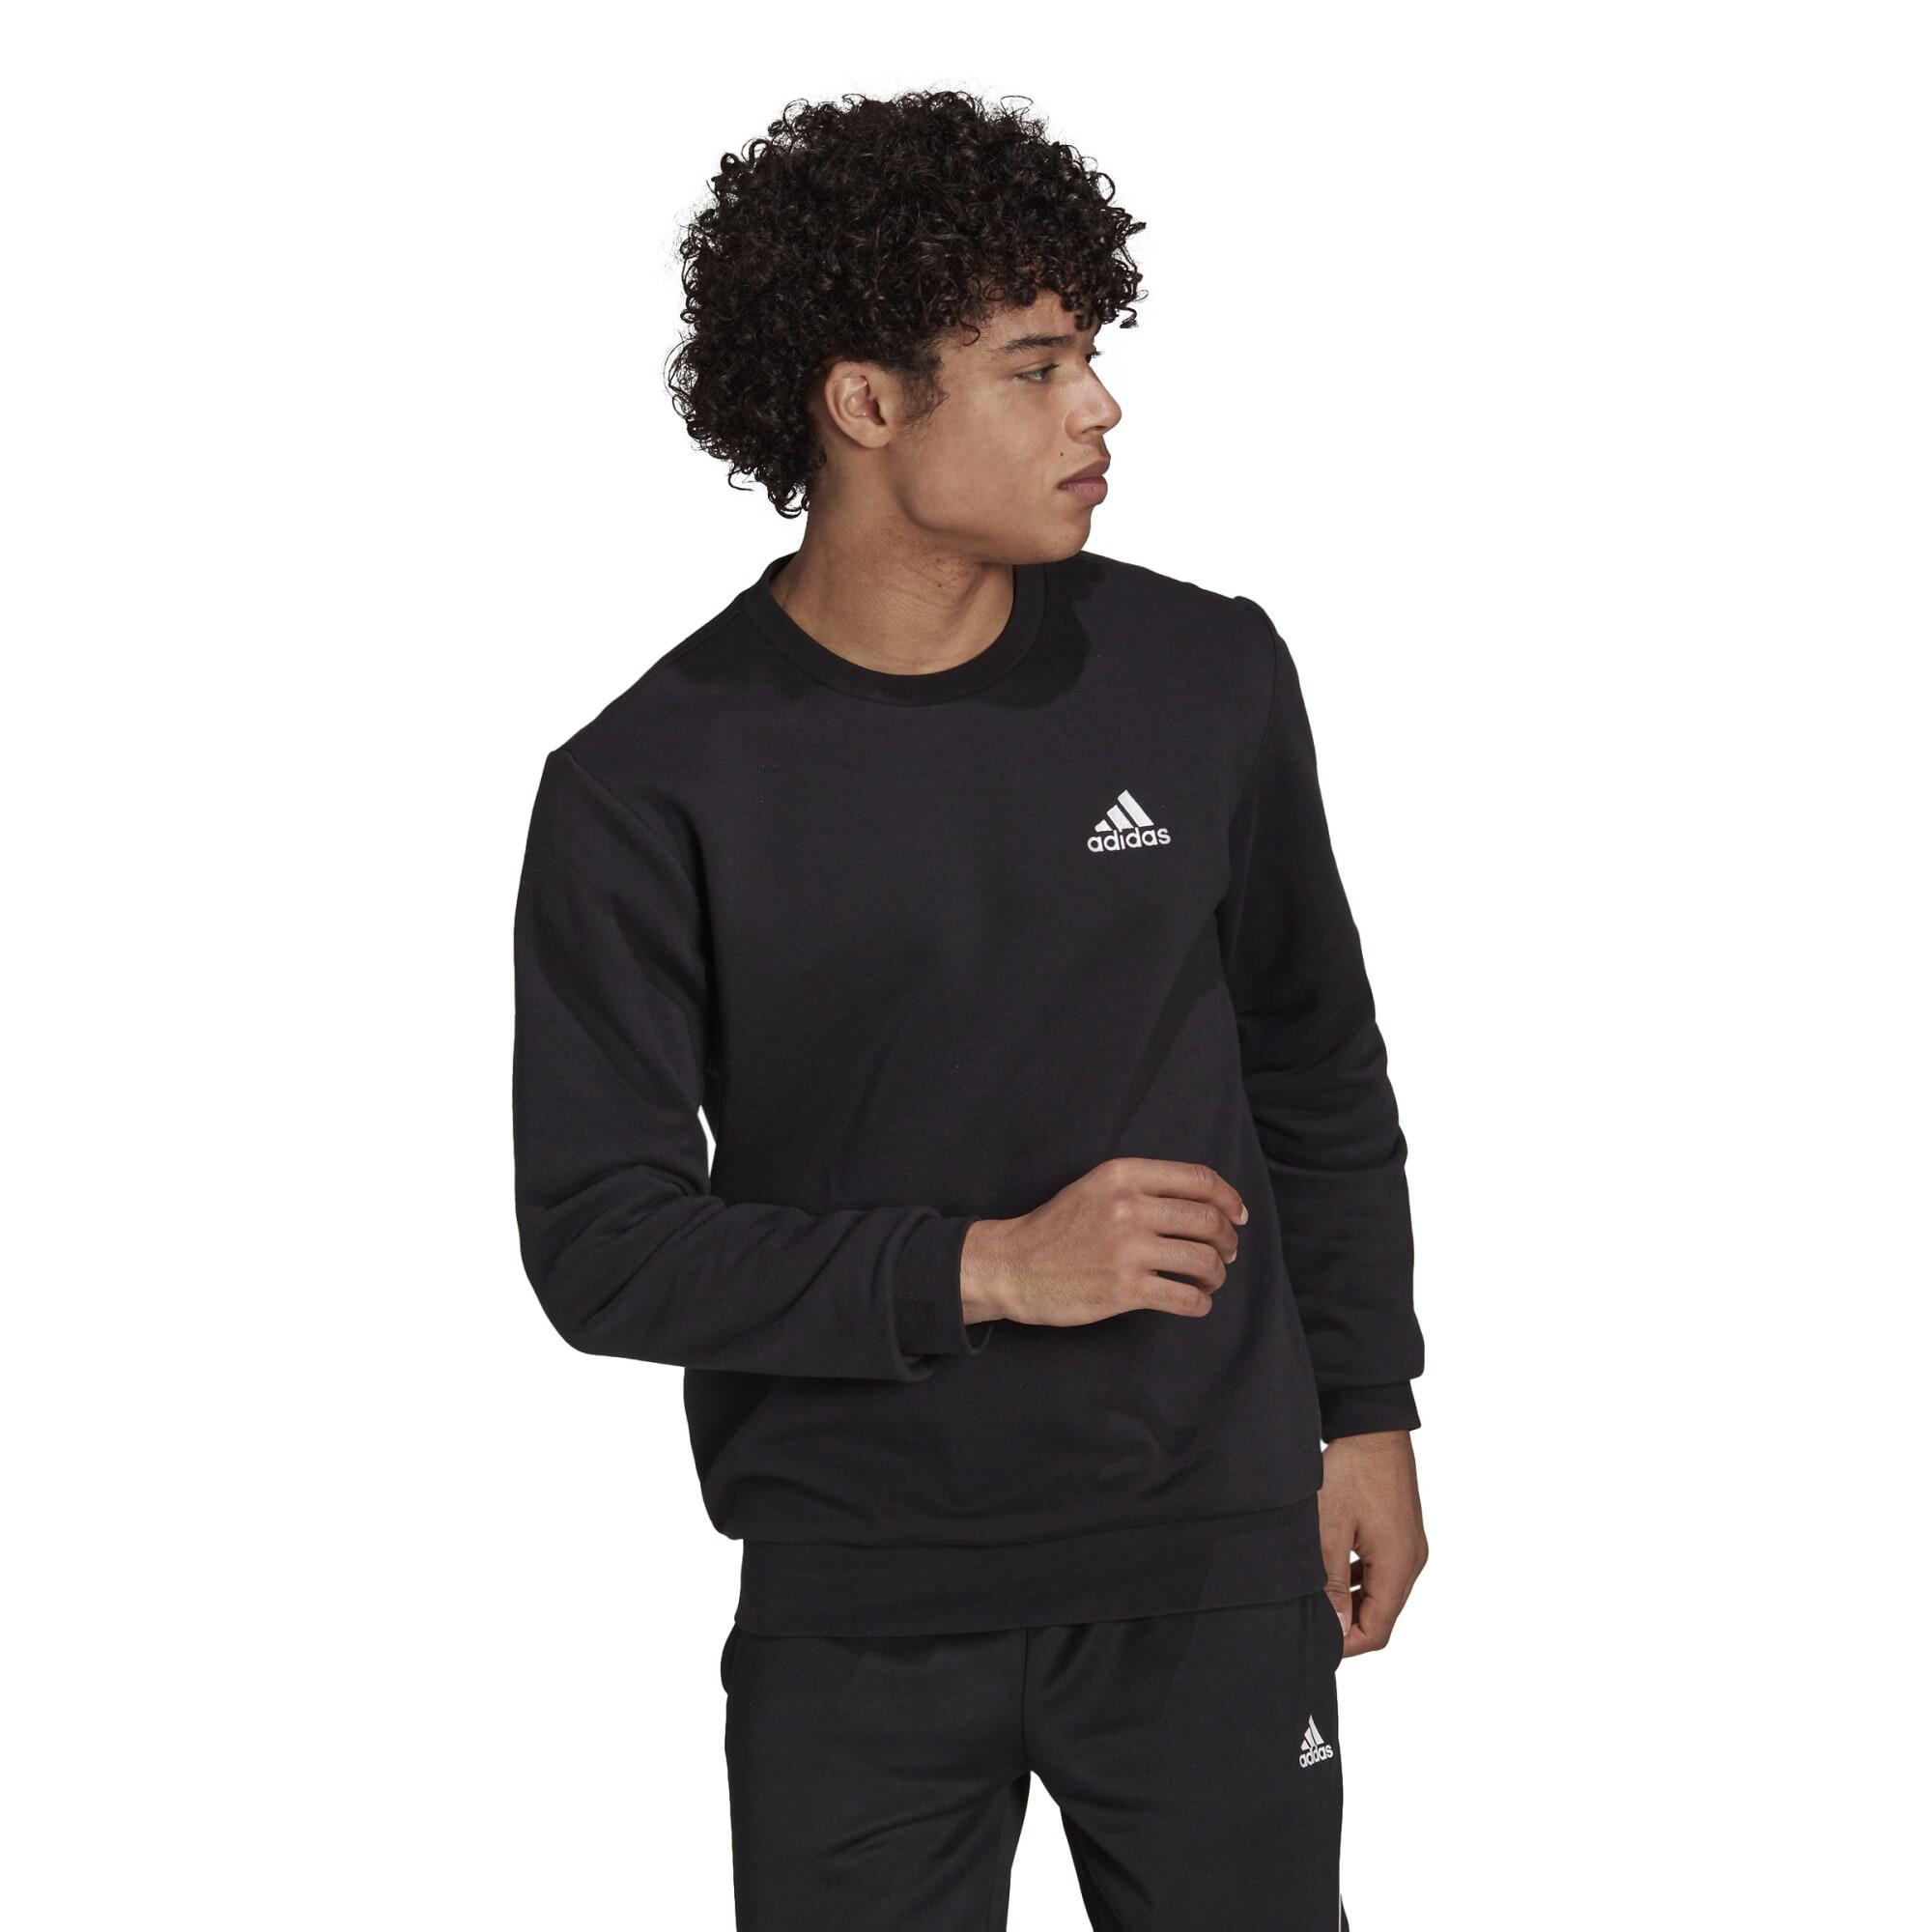 Adidas Sweatshirt Herren - schwarz